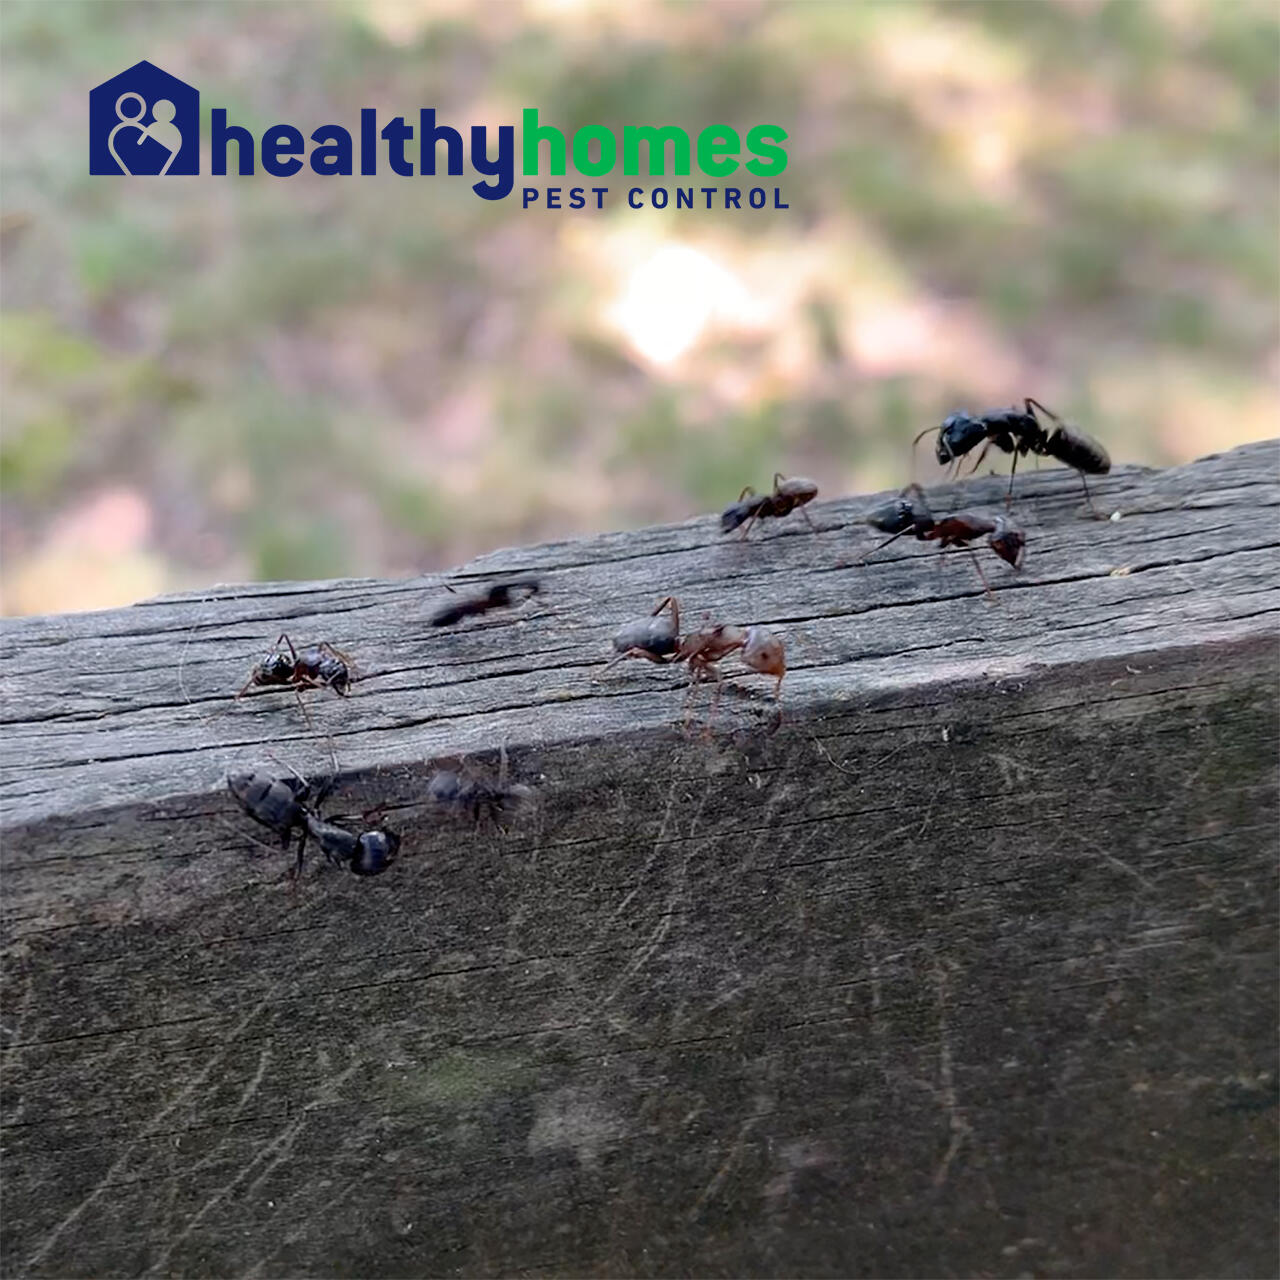 Healthy Homes Pest Control 478 Stoneleigh Rd, Palmyra Virginia 22963